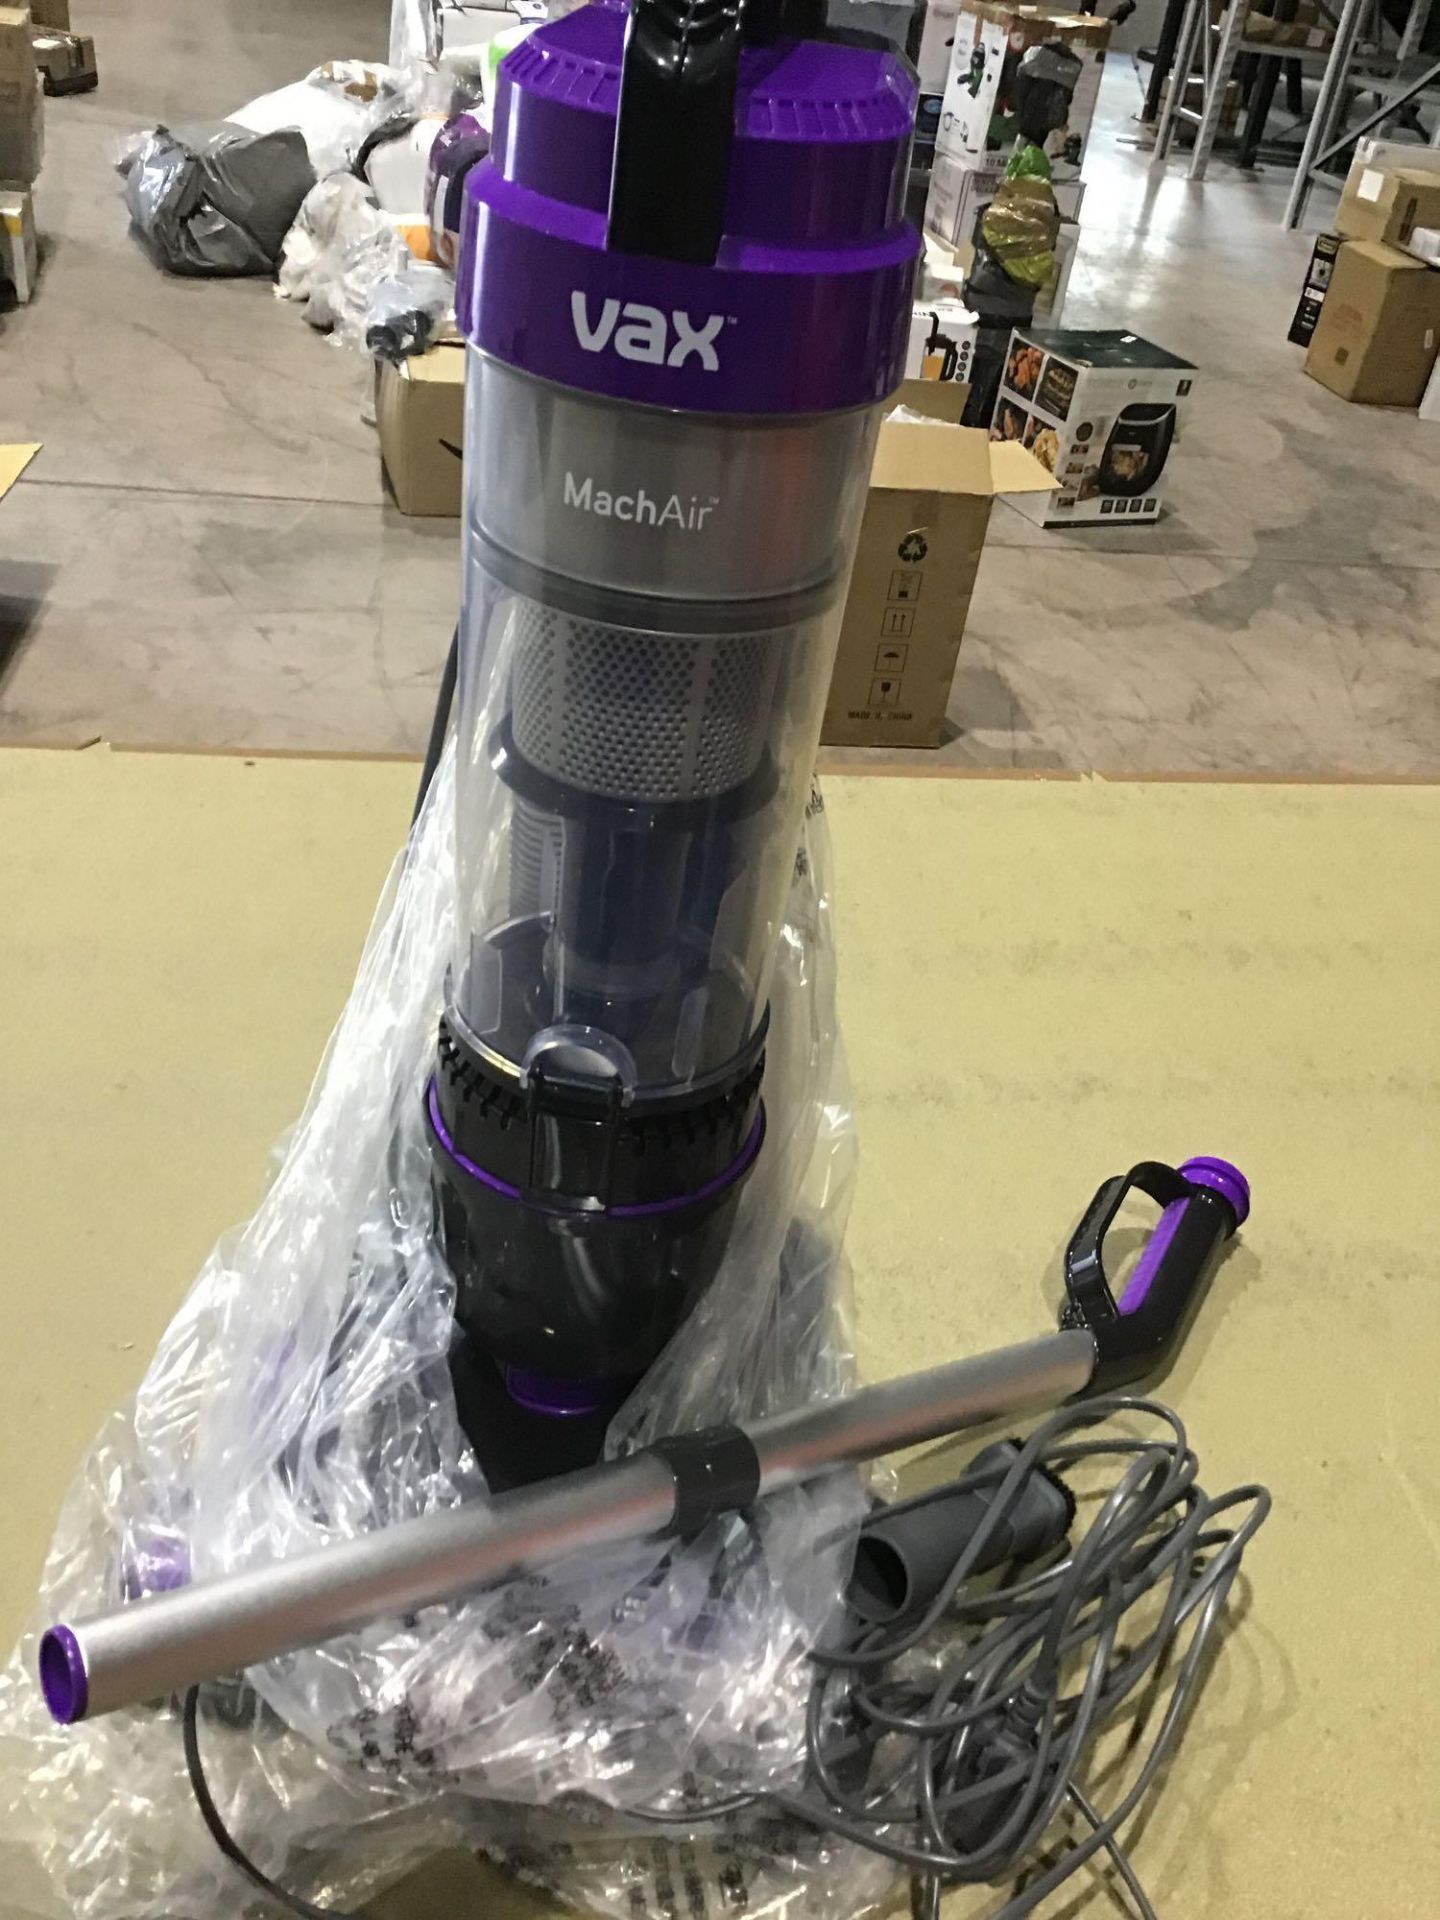 Vax Mach Air Upright Vacuum Cleaner, 1.5 Liters, Purple £79.99 RRP - Image 2 of 4